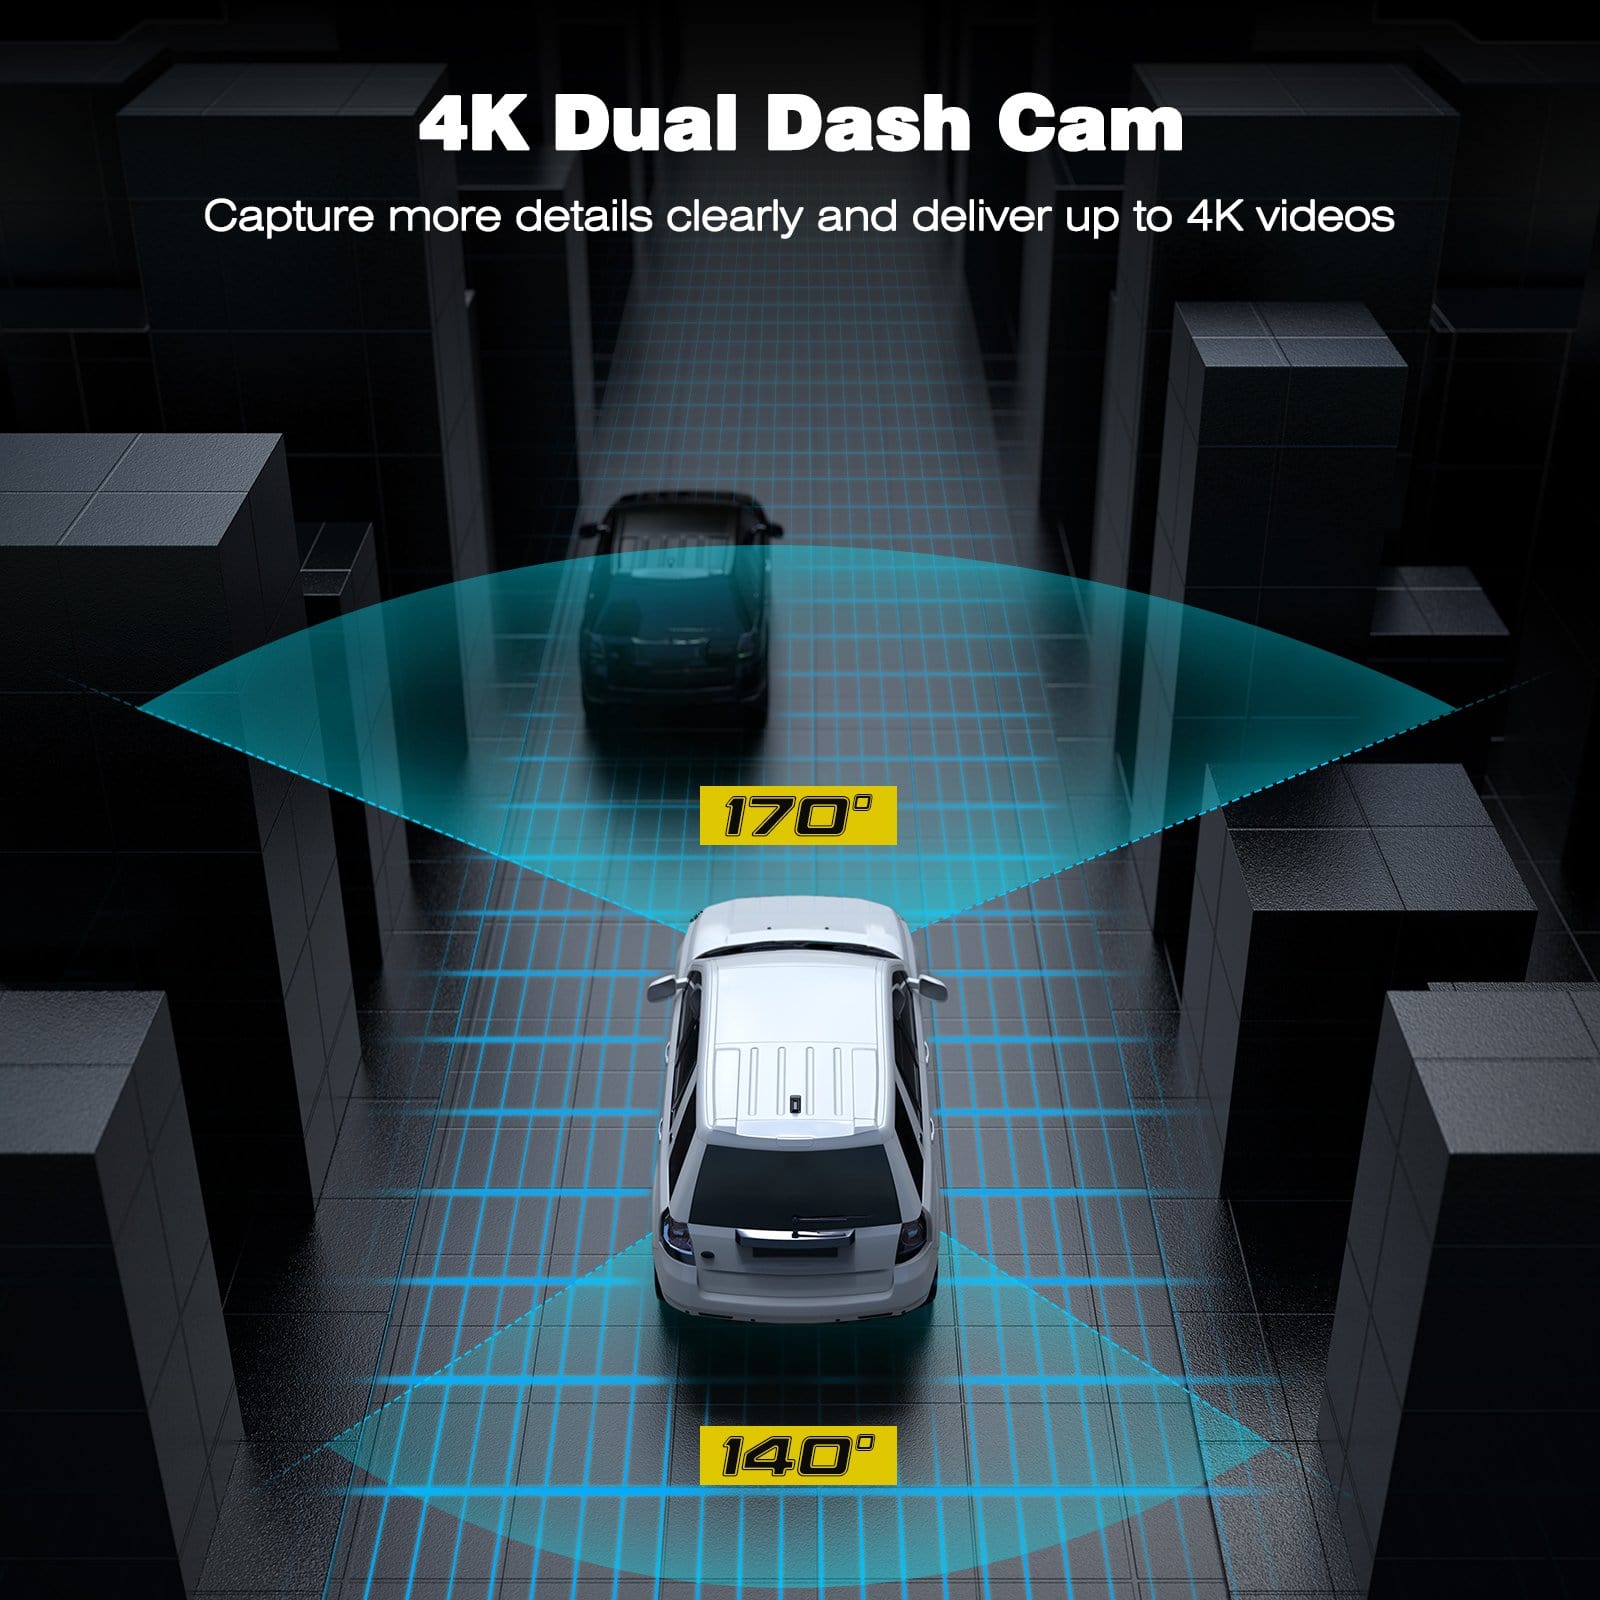 Buy Dash Cam Online, Campark DC30A Dash Cam